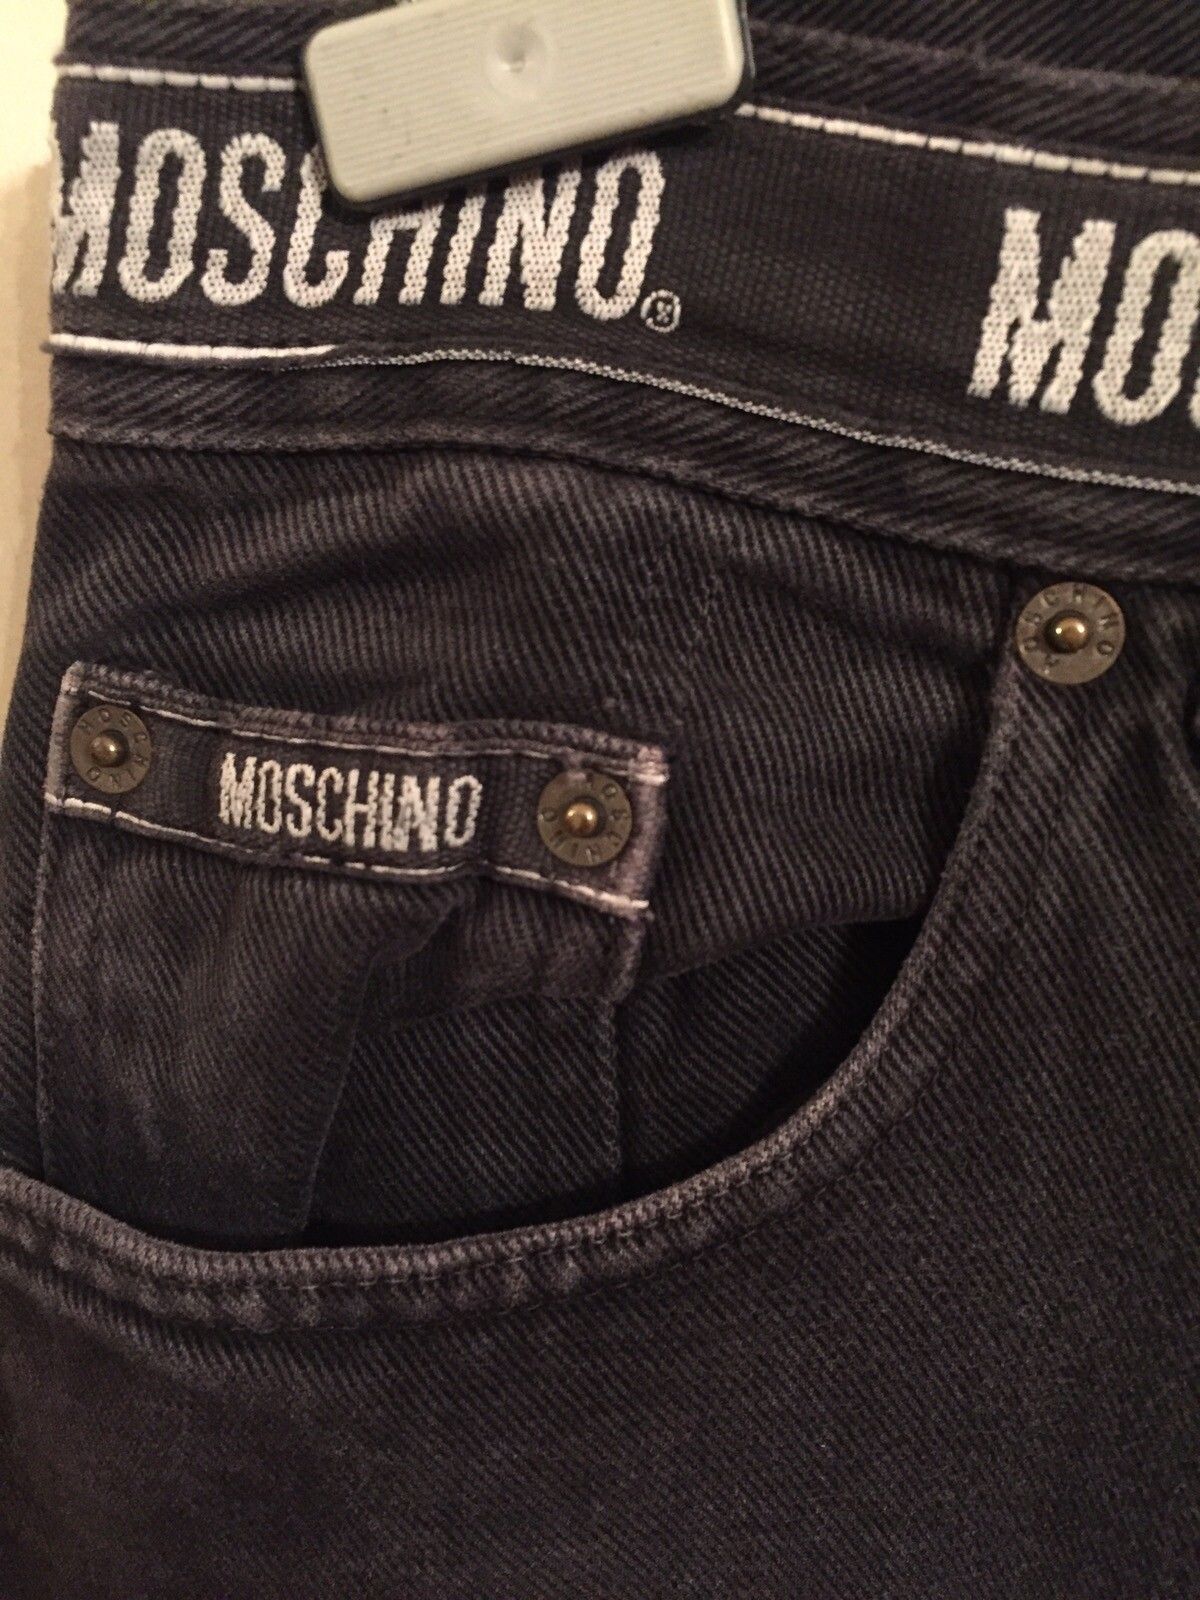 Moschino Moschino Pants 32 Peace Sign Black Rare Vintage Moschino Size US 32 / EU 48 - 5 Thumbnail